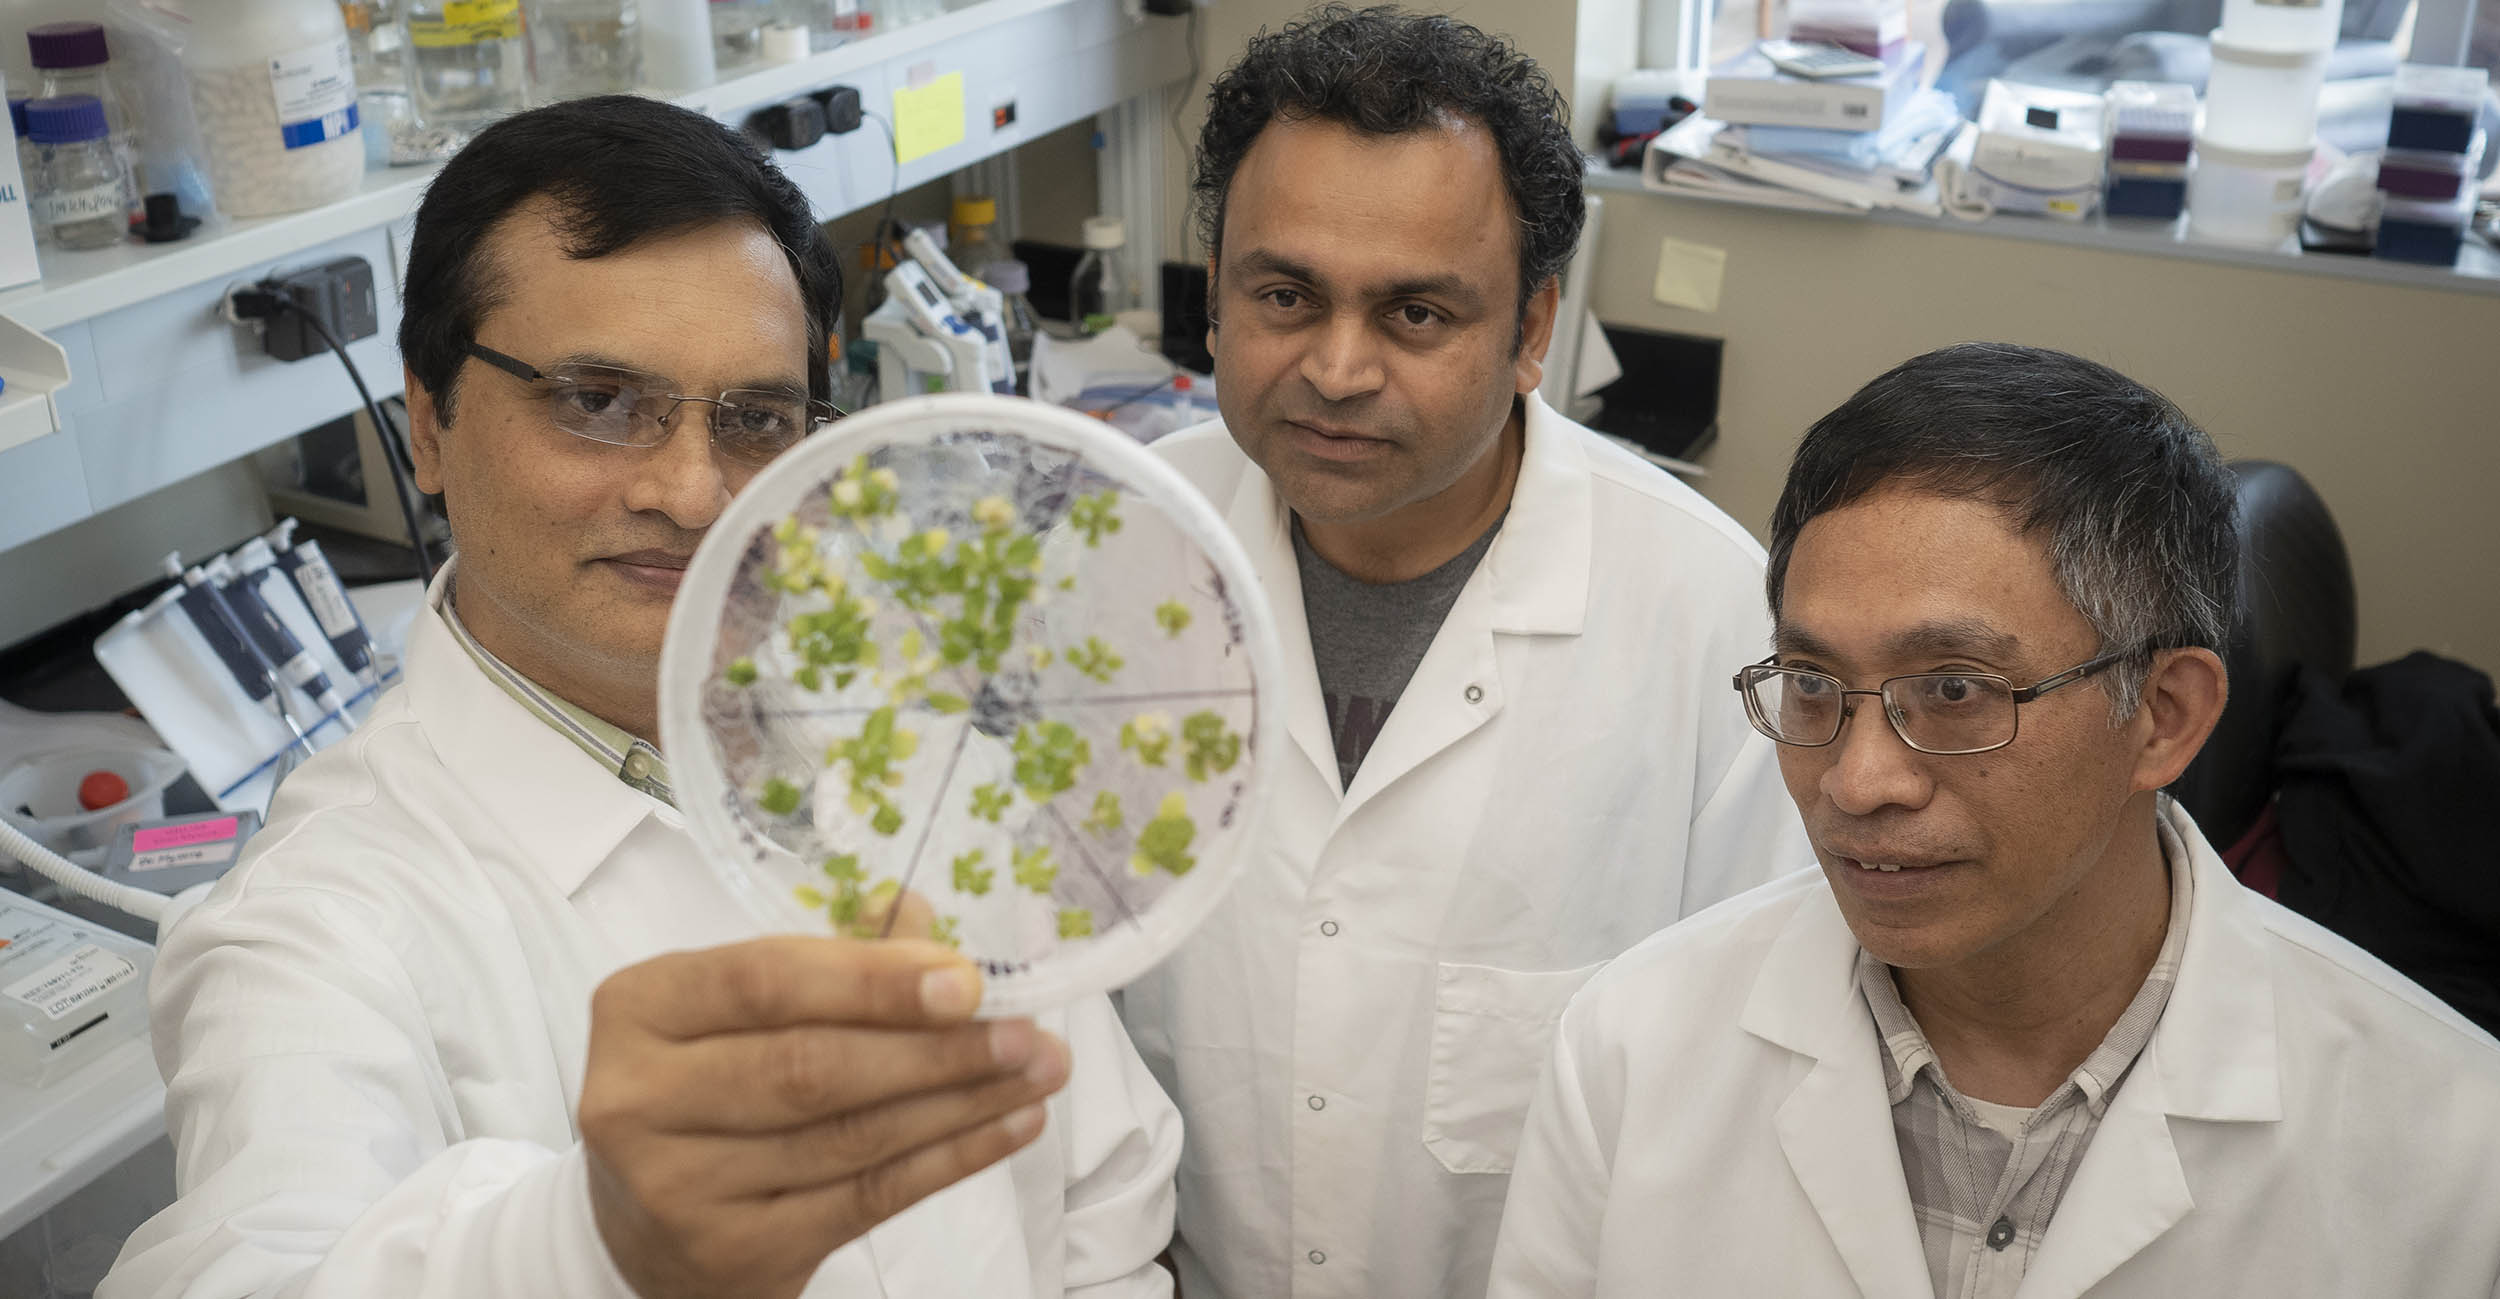 An Image of Kiran Mysore, Bikrim Pant and Jiangqi Wen looking at a legume sample.